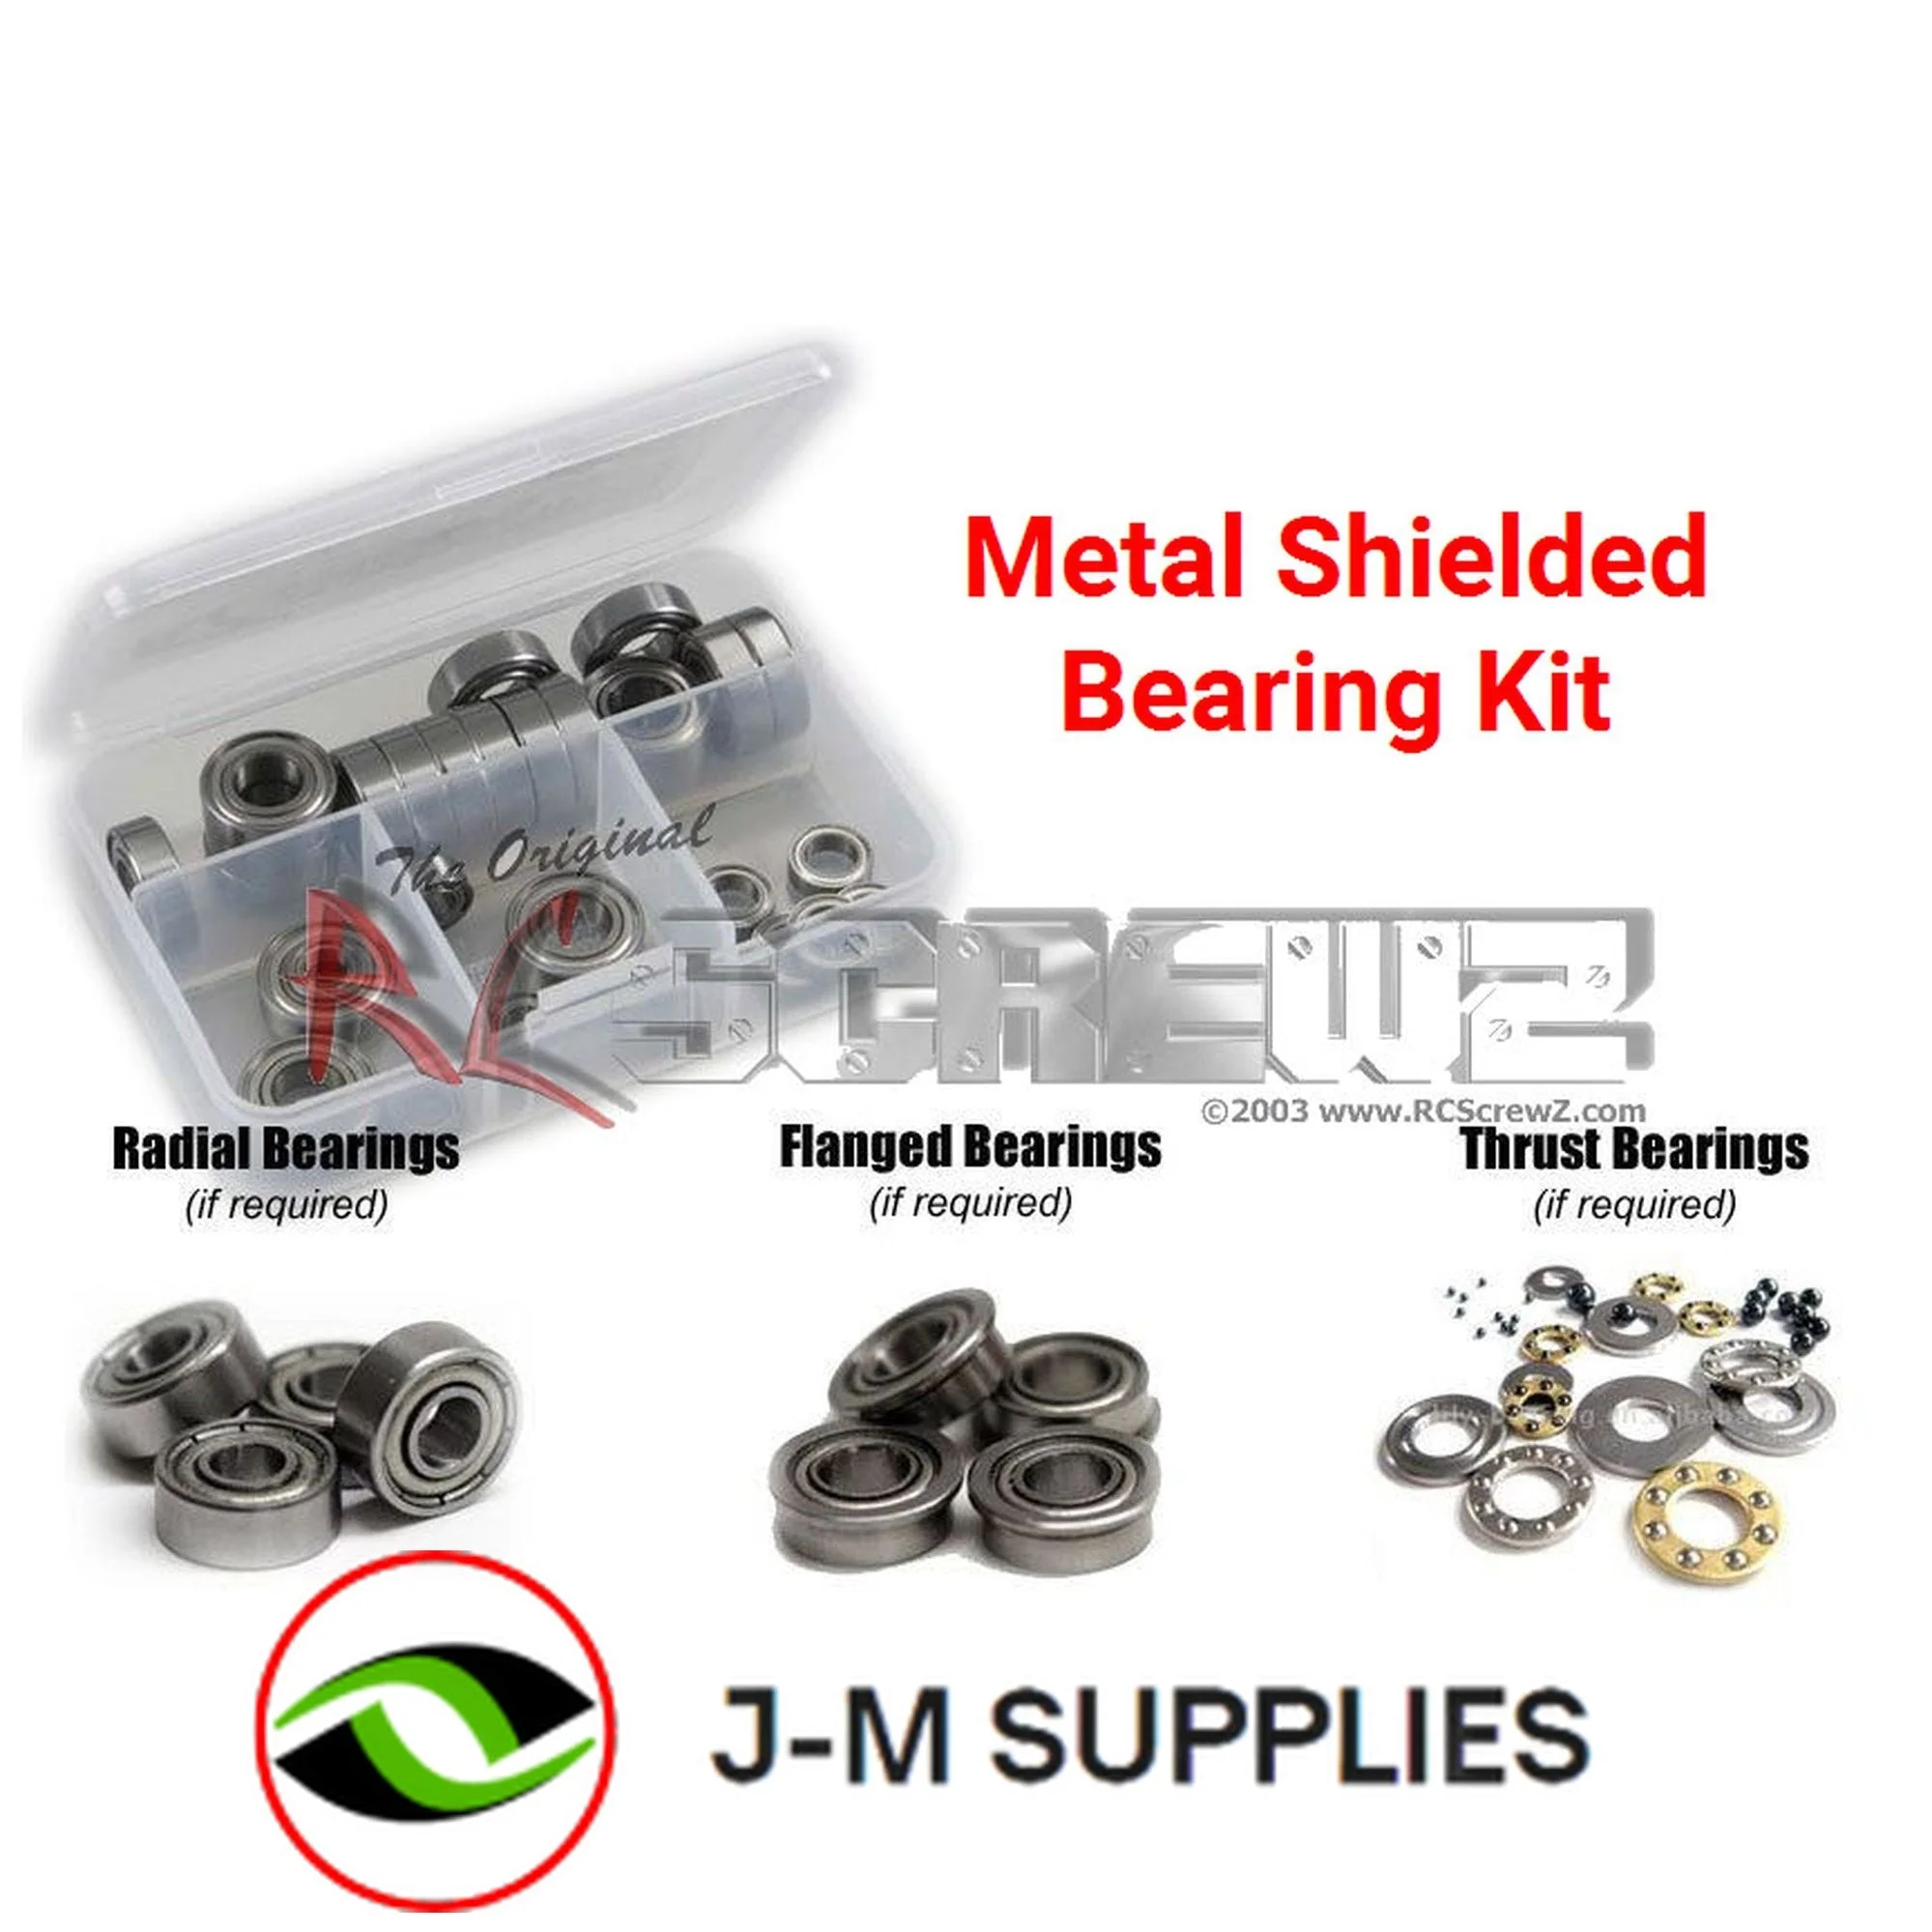 RCScrewZ Metal Shielded Bearing Kit tam047b for Tamiya Fox 1/10th #58051 - Picture 1 of 12